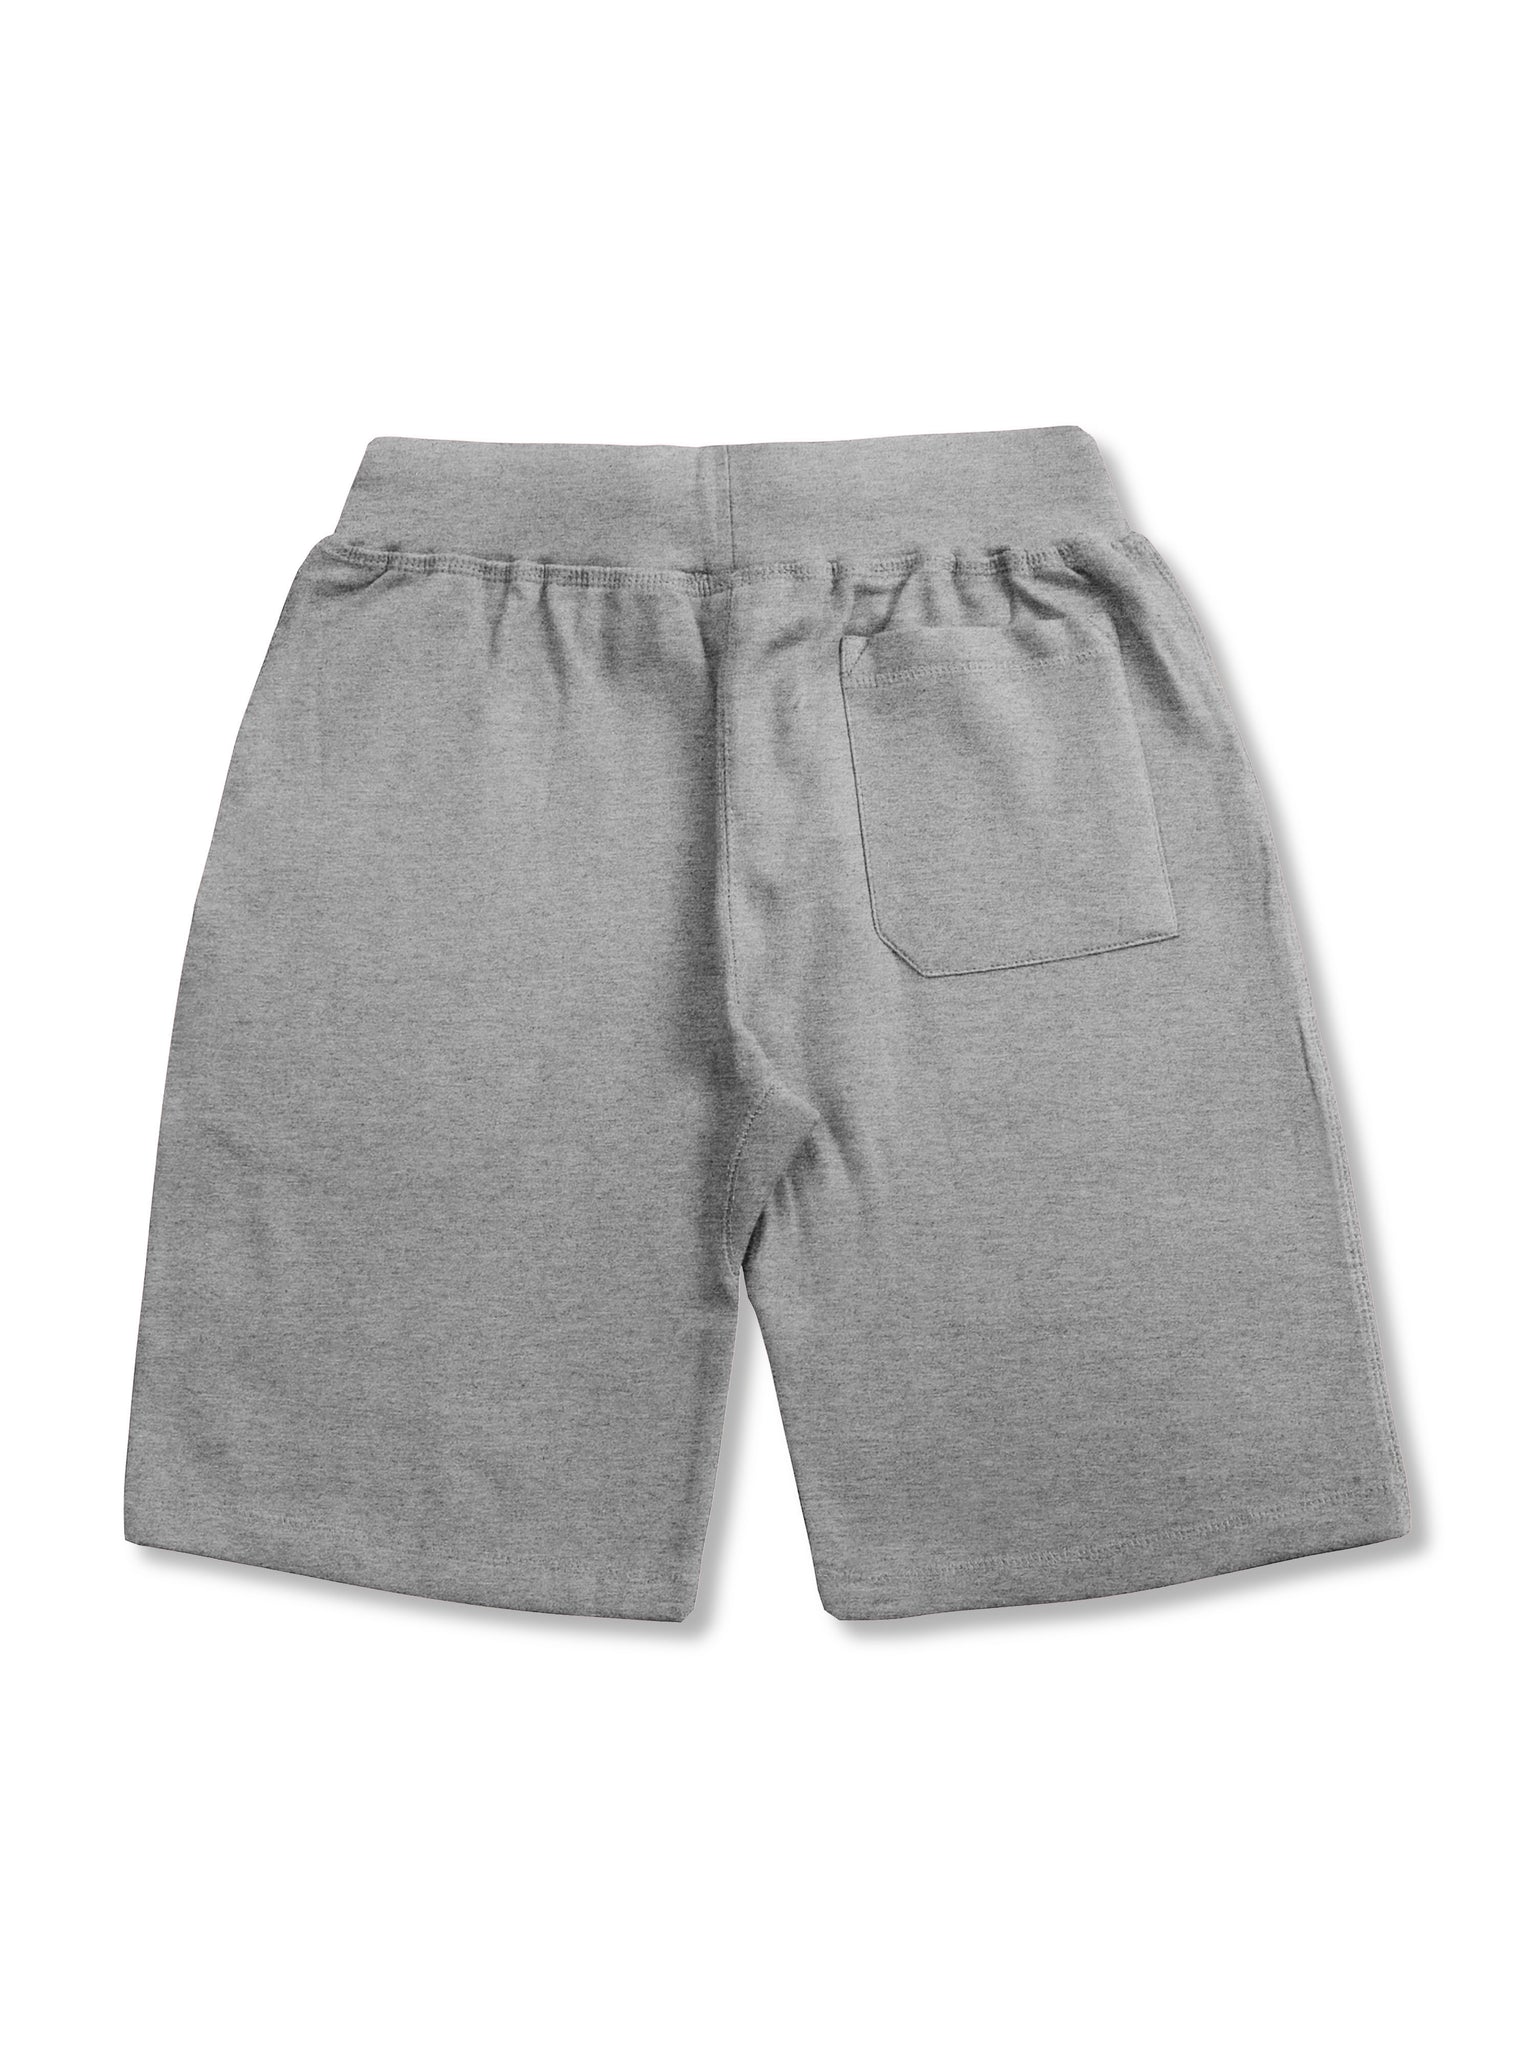 Mens Premium Sweat Shorts - Men > Shorts > Sweats